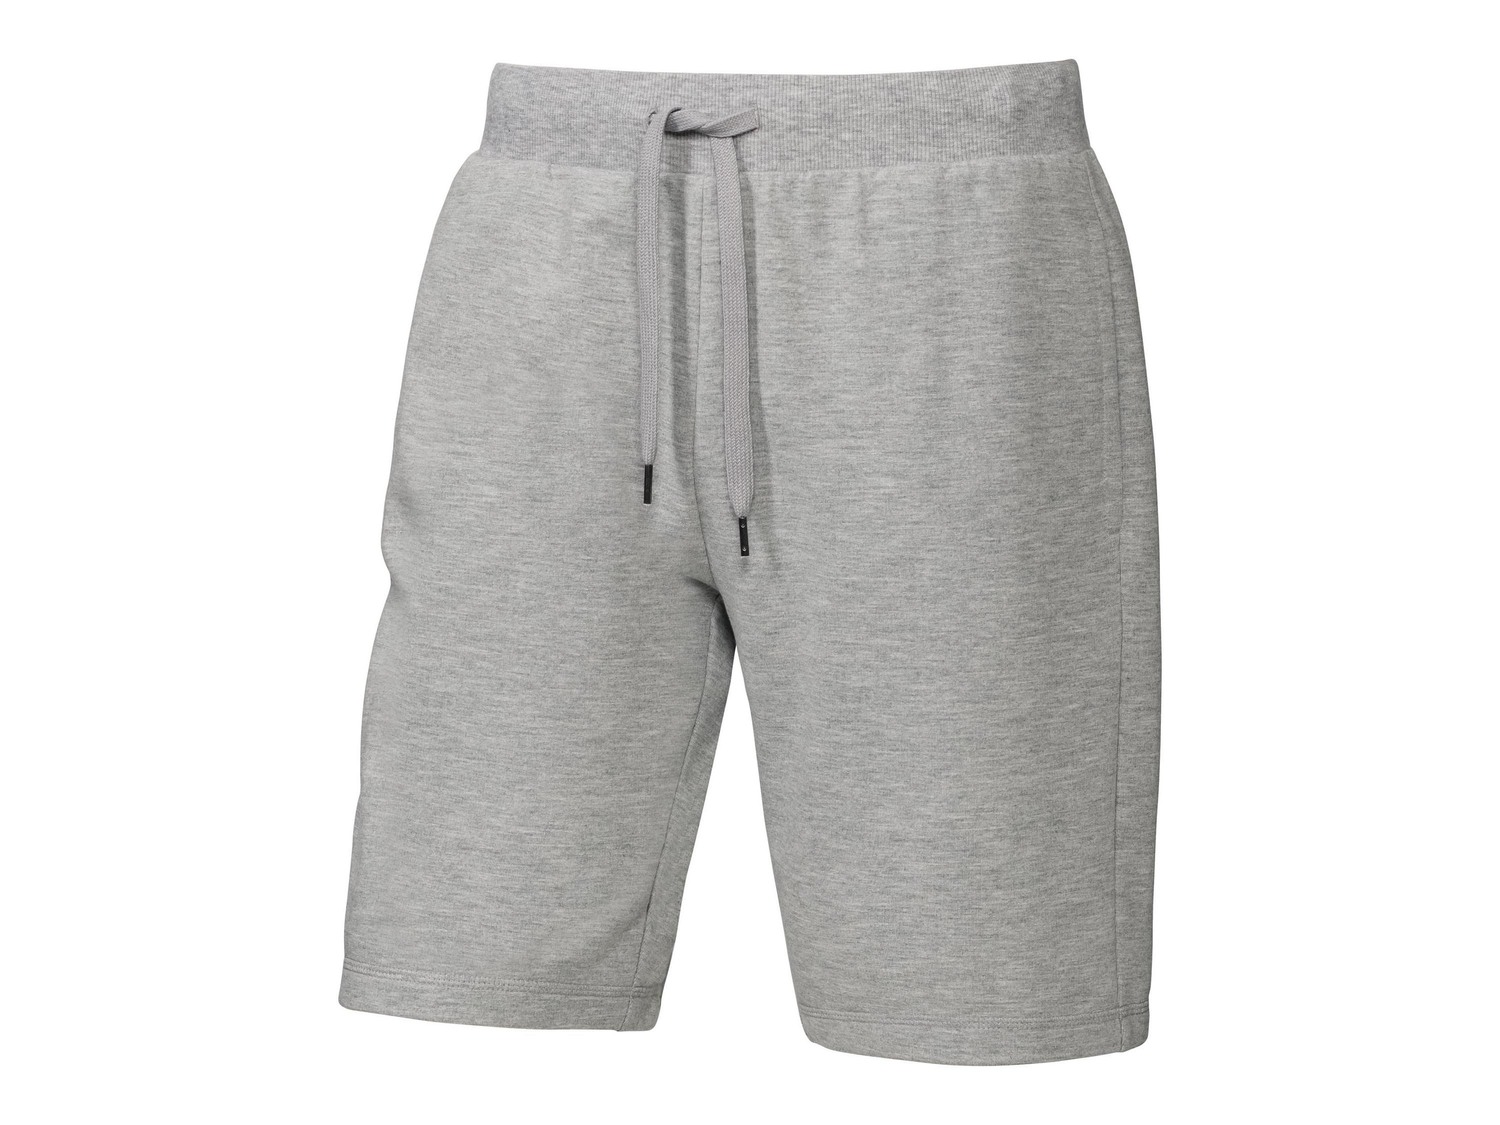 Shorts sportivi da uomo Crivit, prezzo 5.99 &#8364;  
Misure: S-XL
- Oeko tex NEW